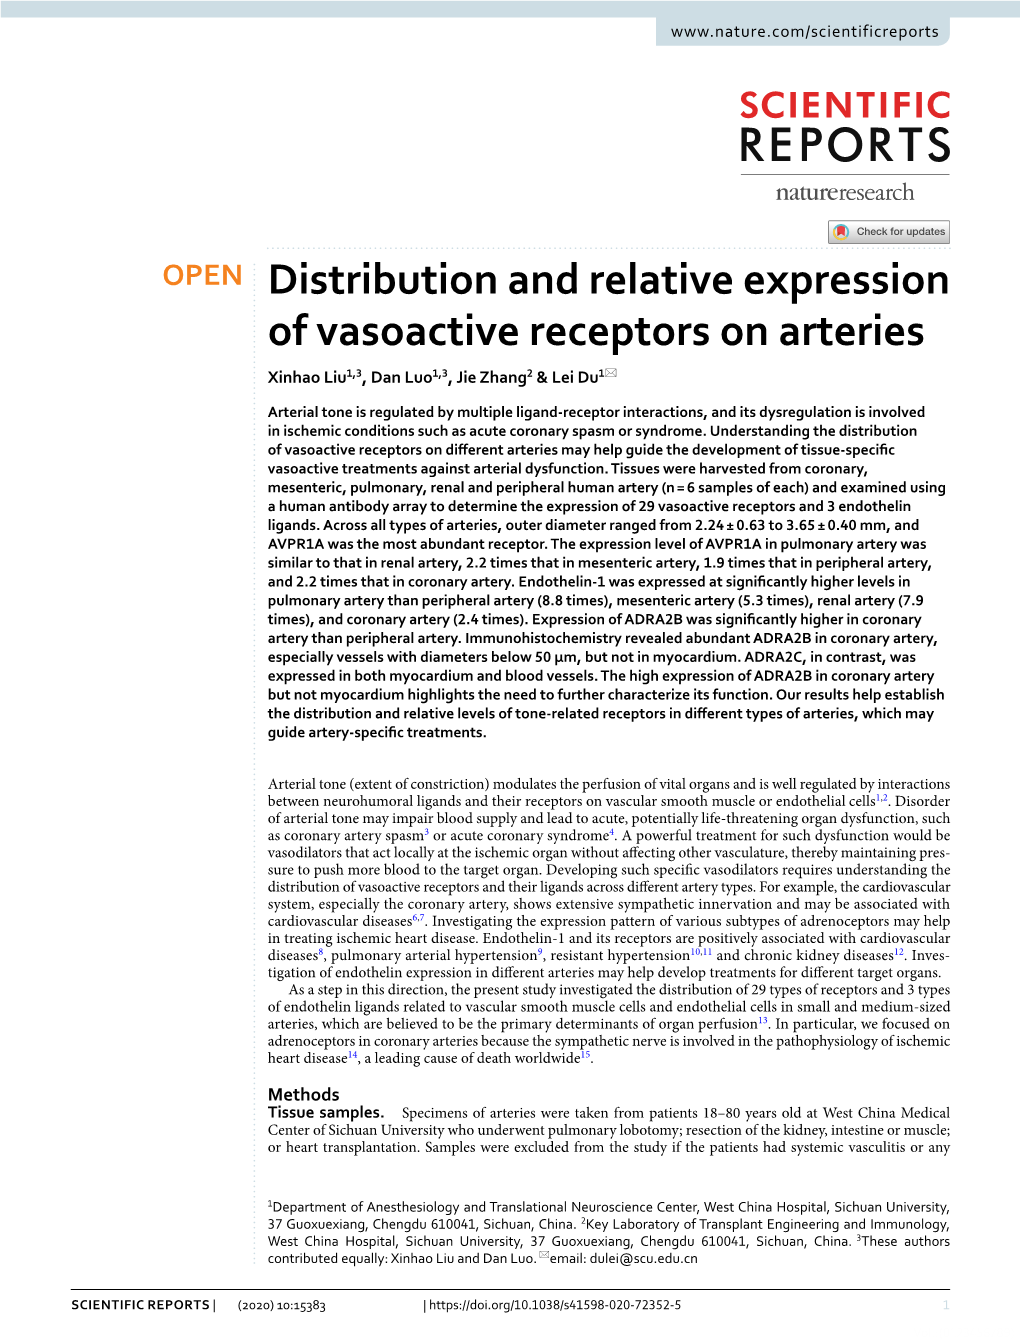 Distribution and Relative Expression of Vasoactive Receptors on Arteries Xinhao Liu1,3, Dan Luo1,3, Jie Zhang2 & Lei Du1*